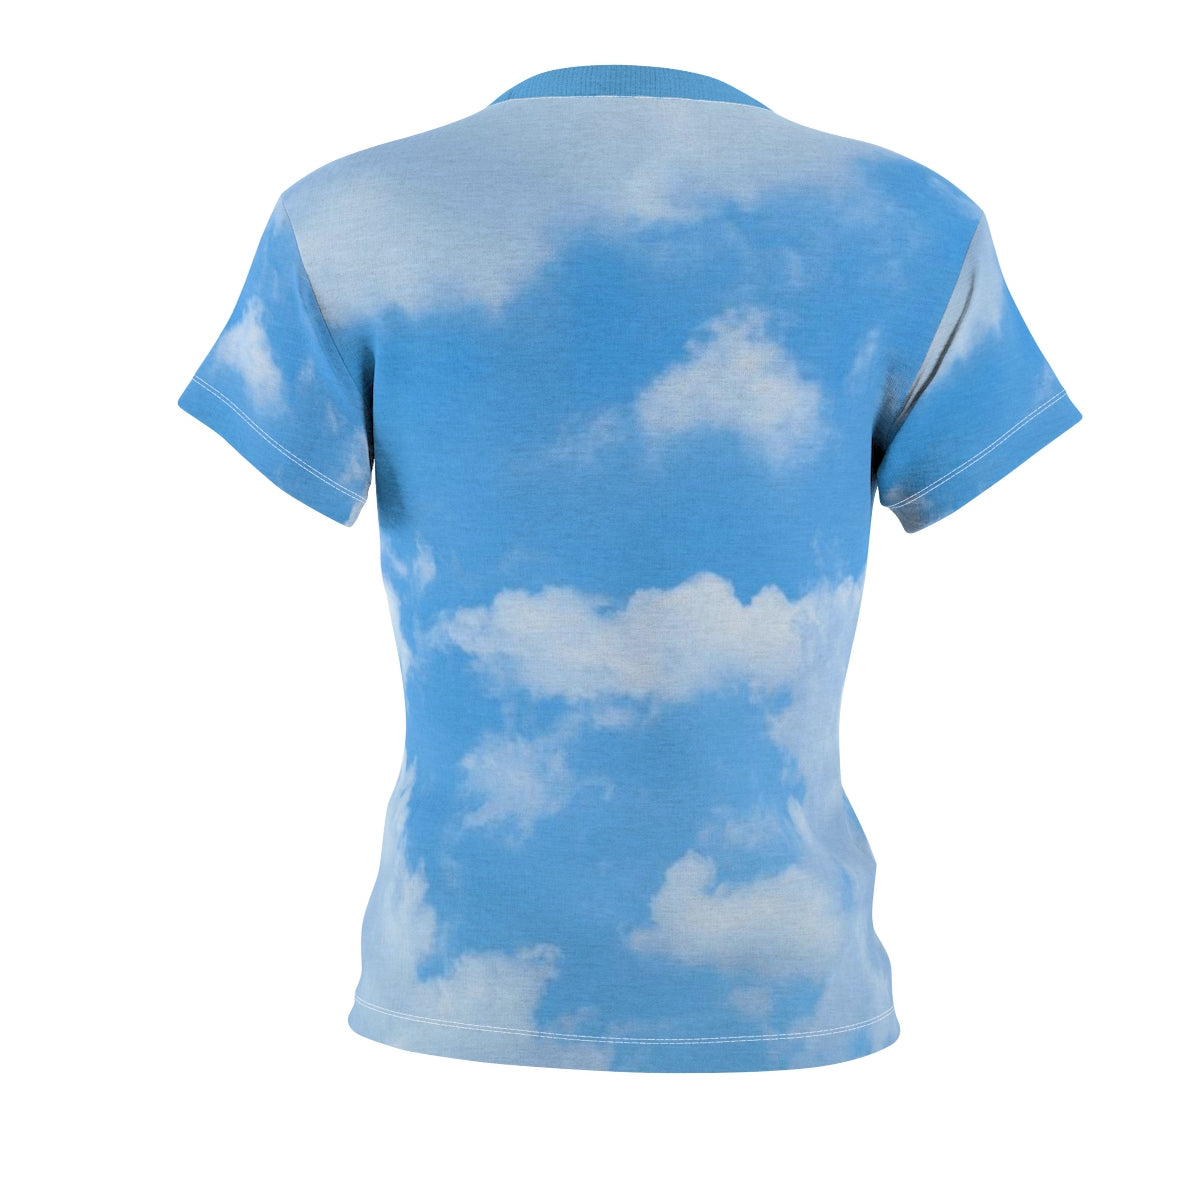 aesthetic cloud shirt